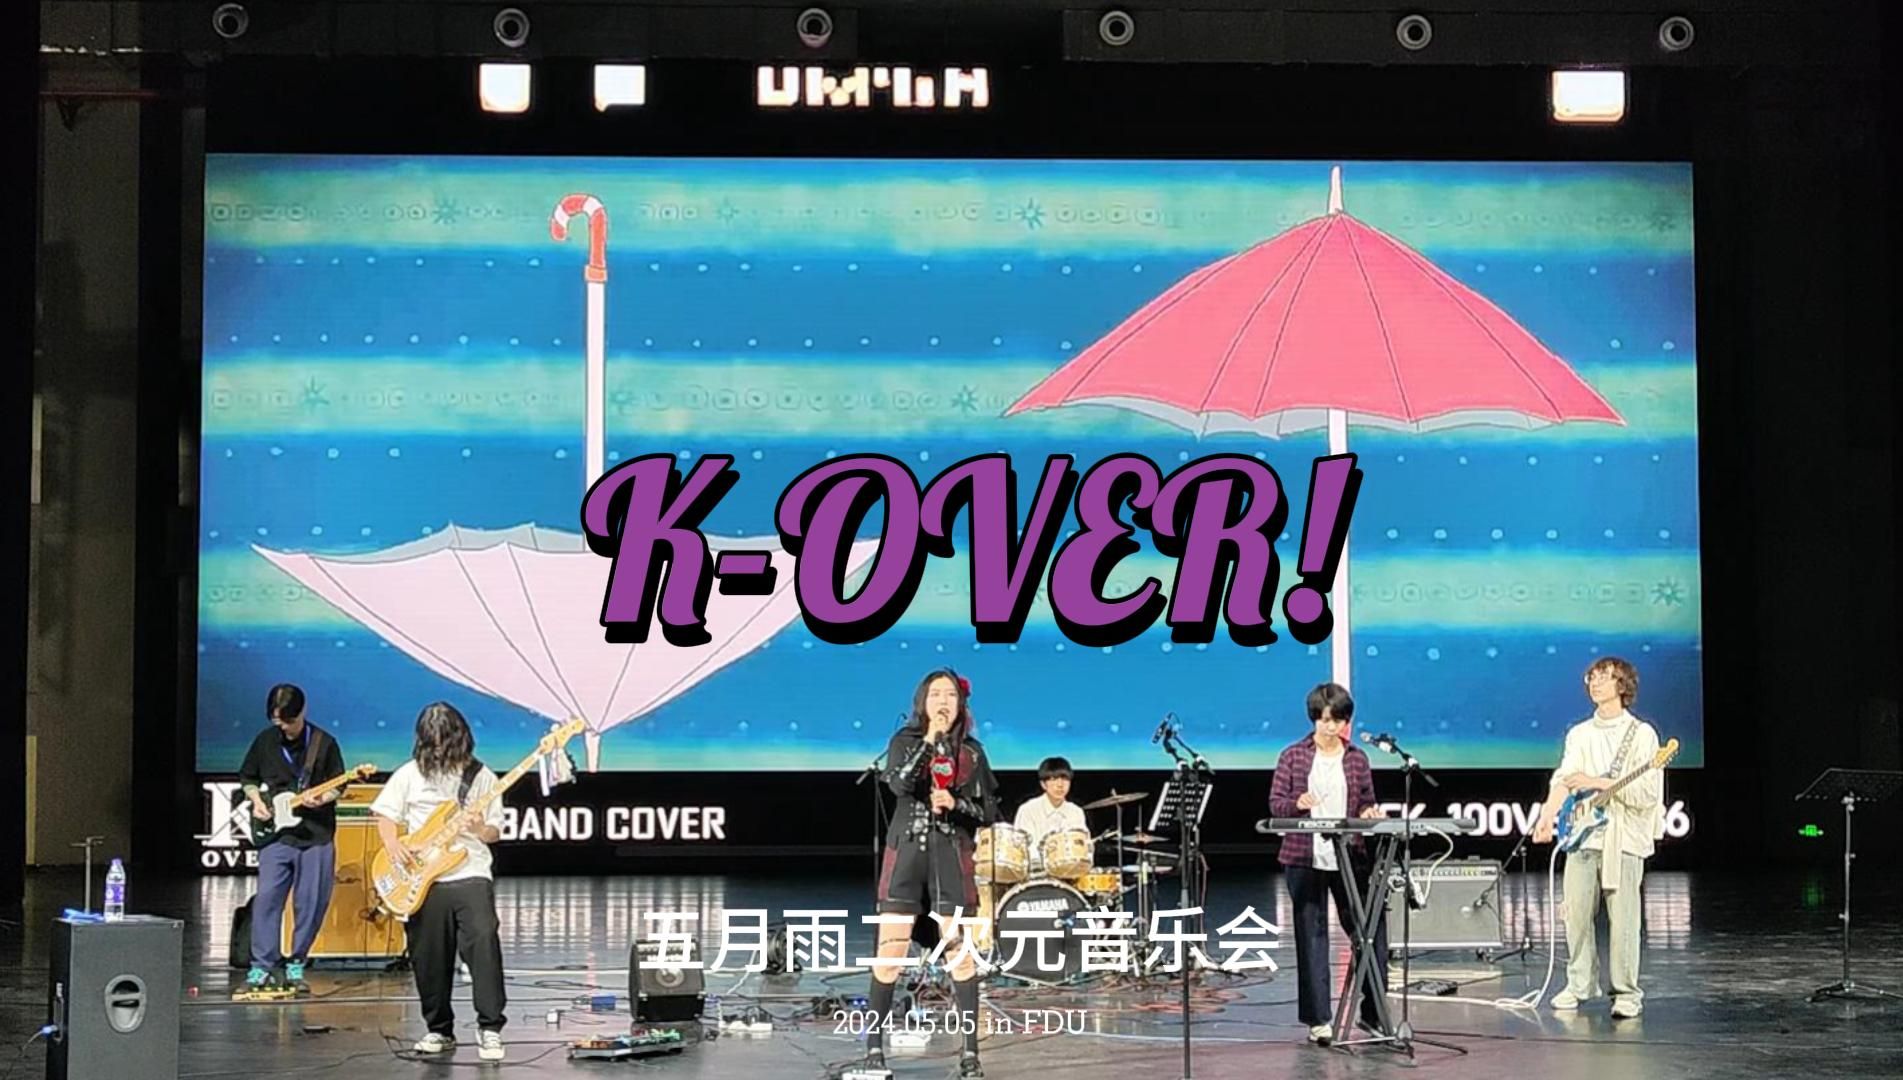 在复旦大学演了真夜中的脳裏上のクラッカー@五月雨二次元音乐会【K-OVER! Live】